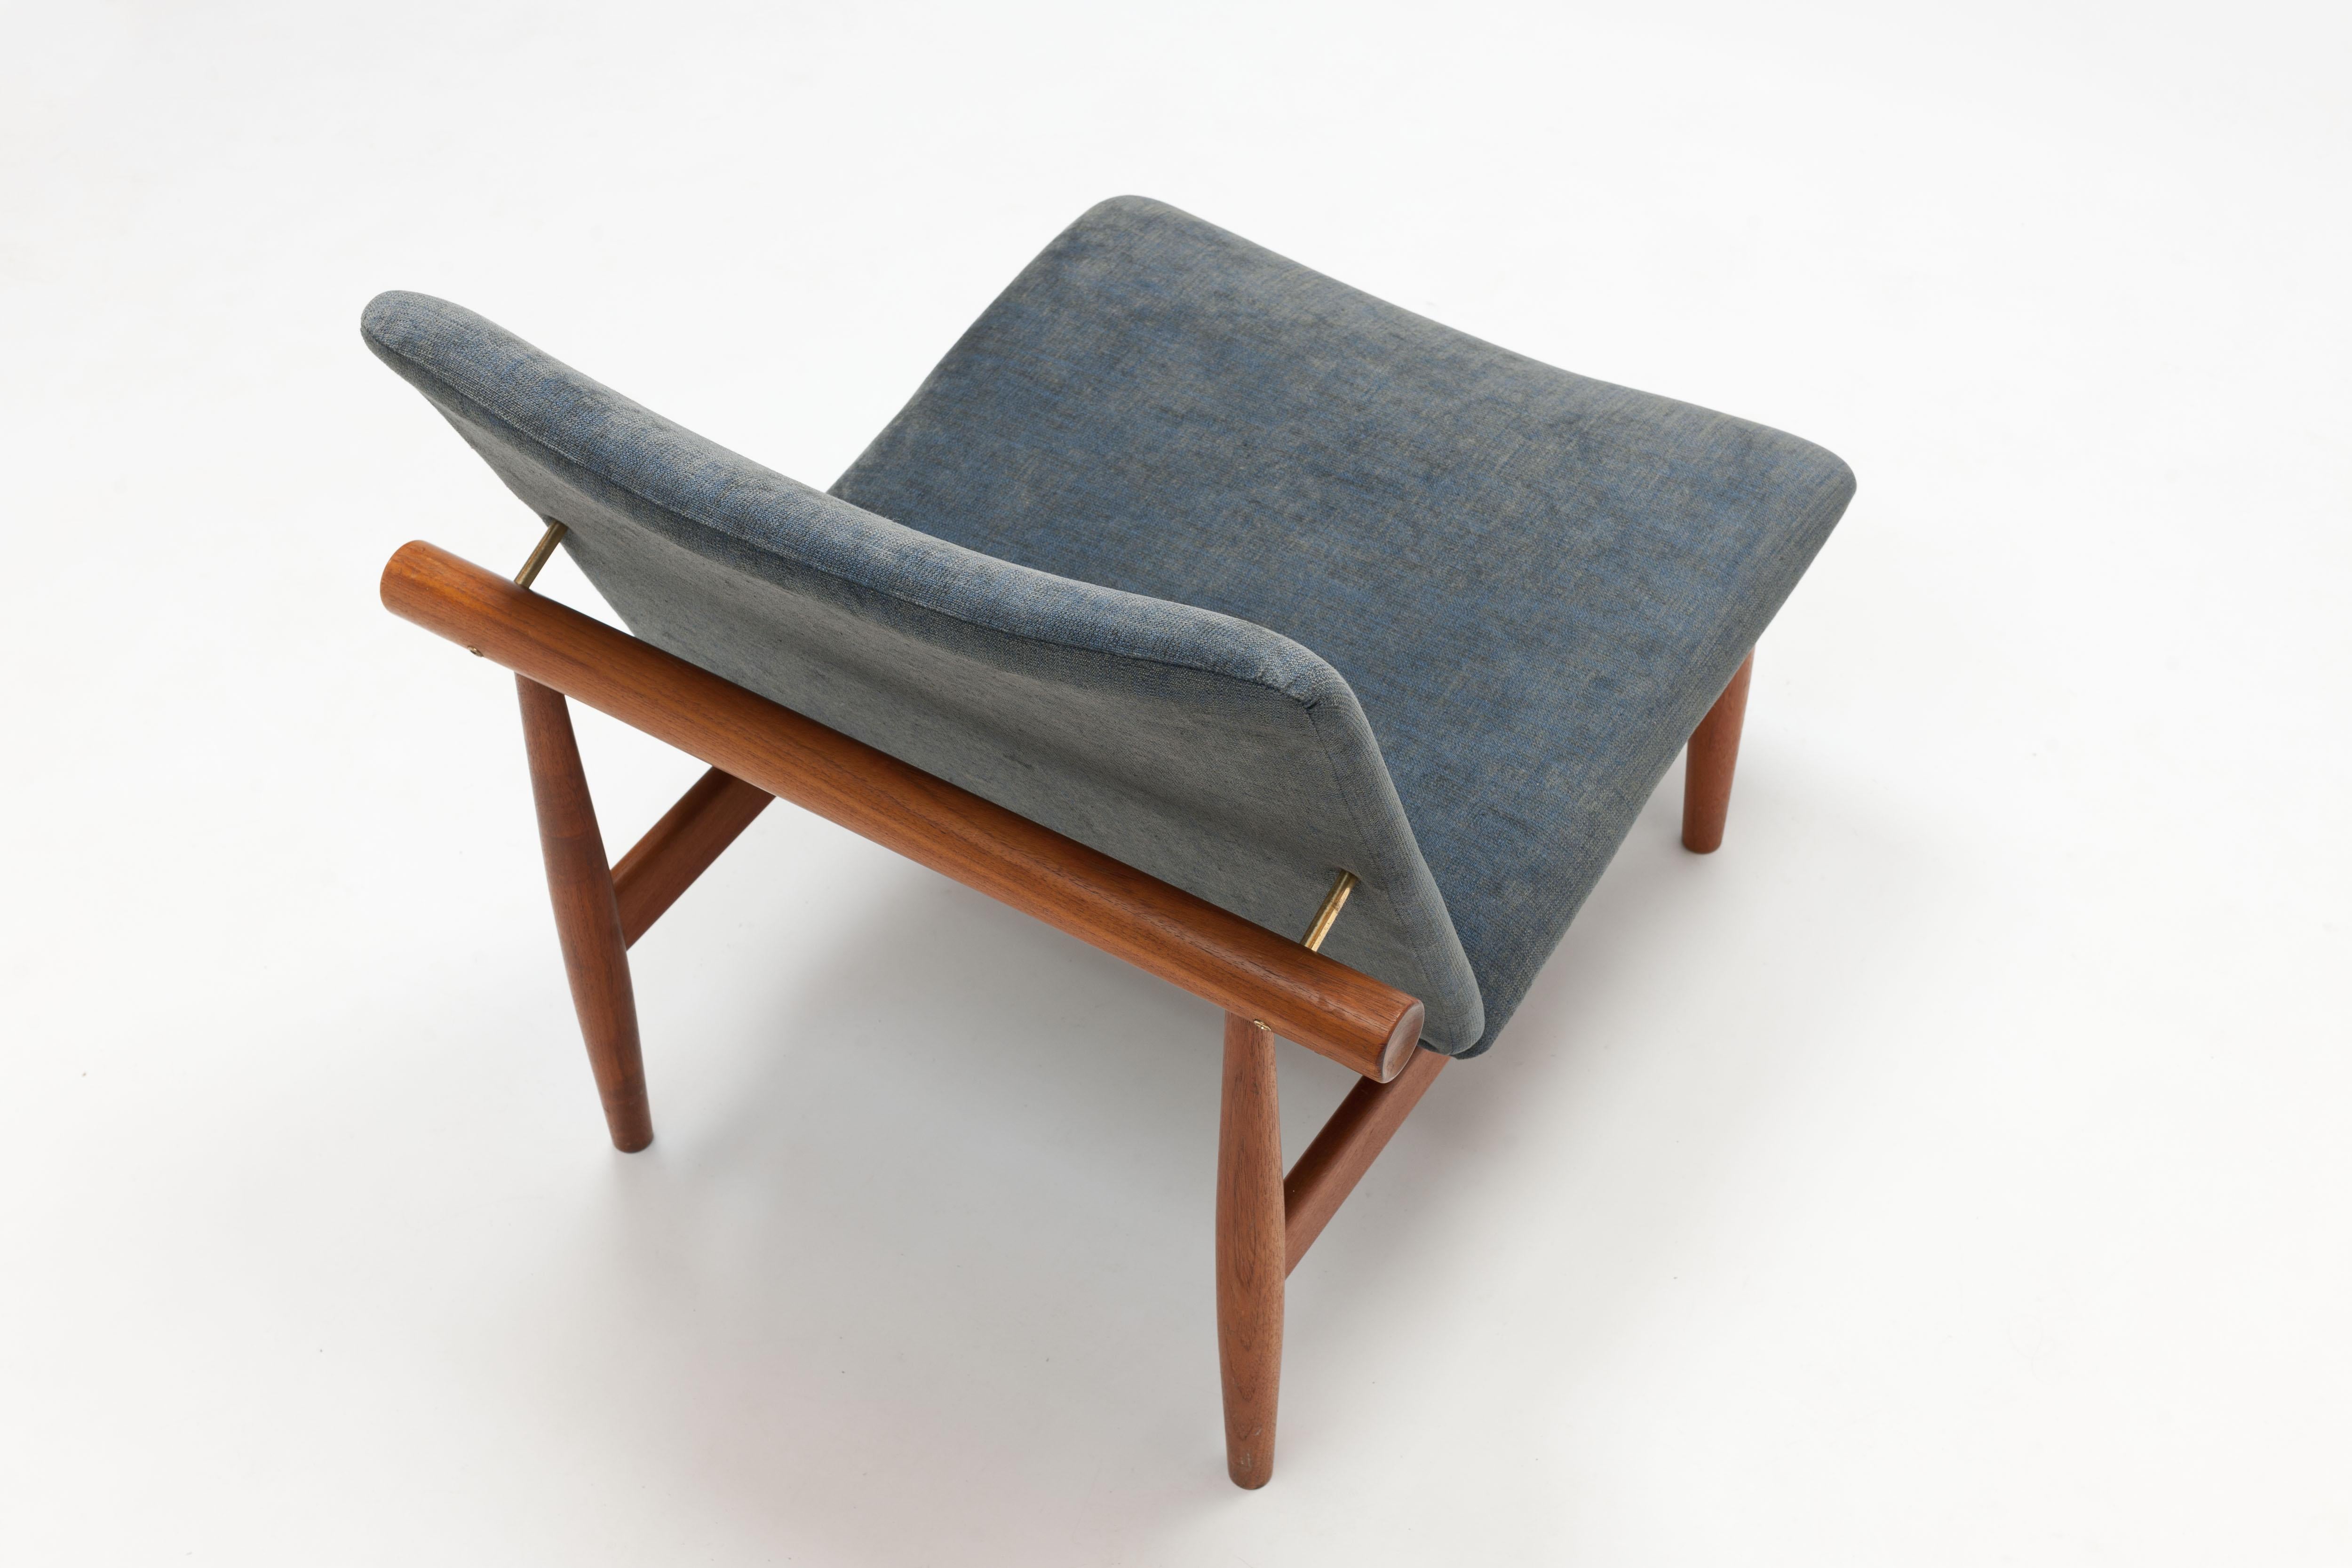 Fabric Vintage Teak Finn Juhl Japan Chair by France & Son, New Upholstery